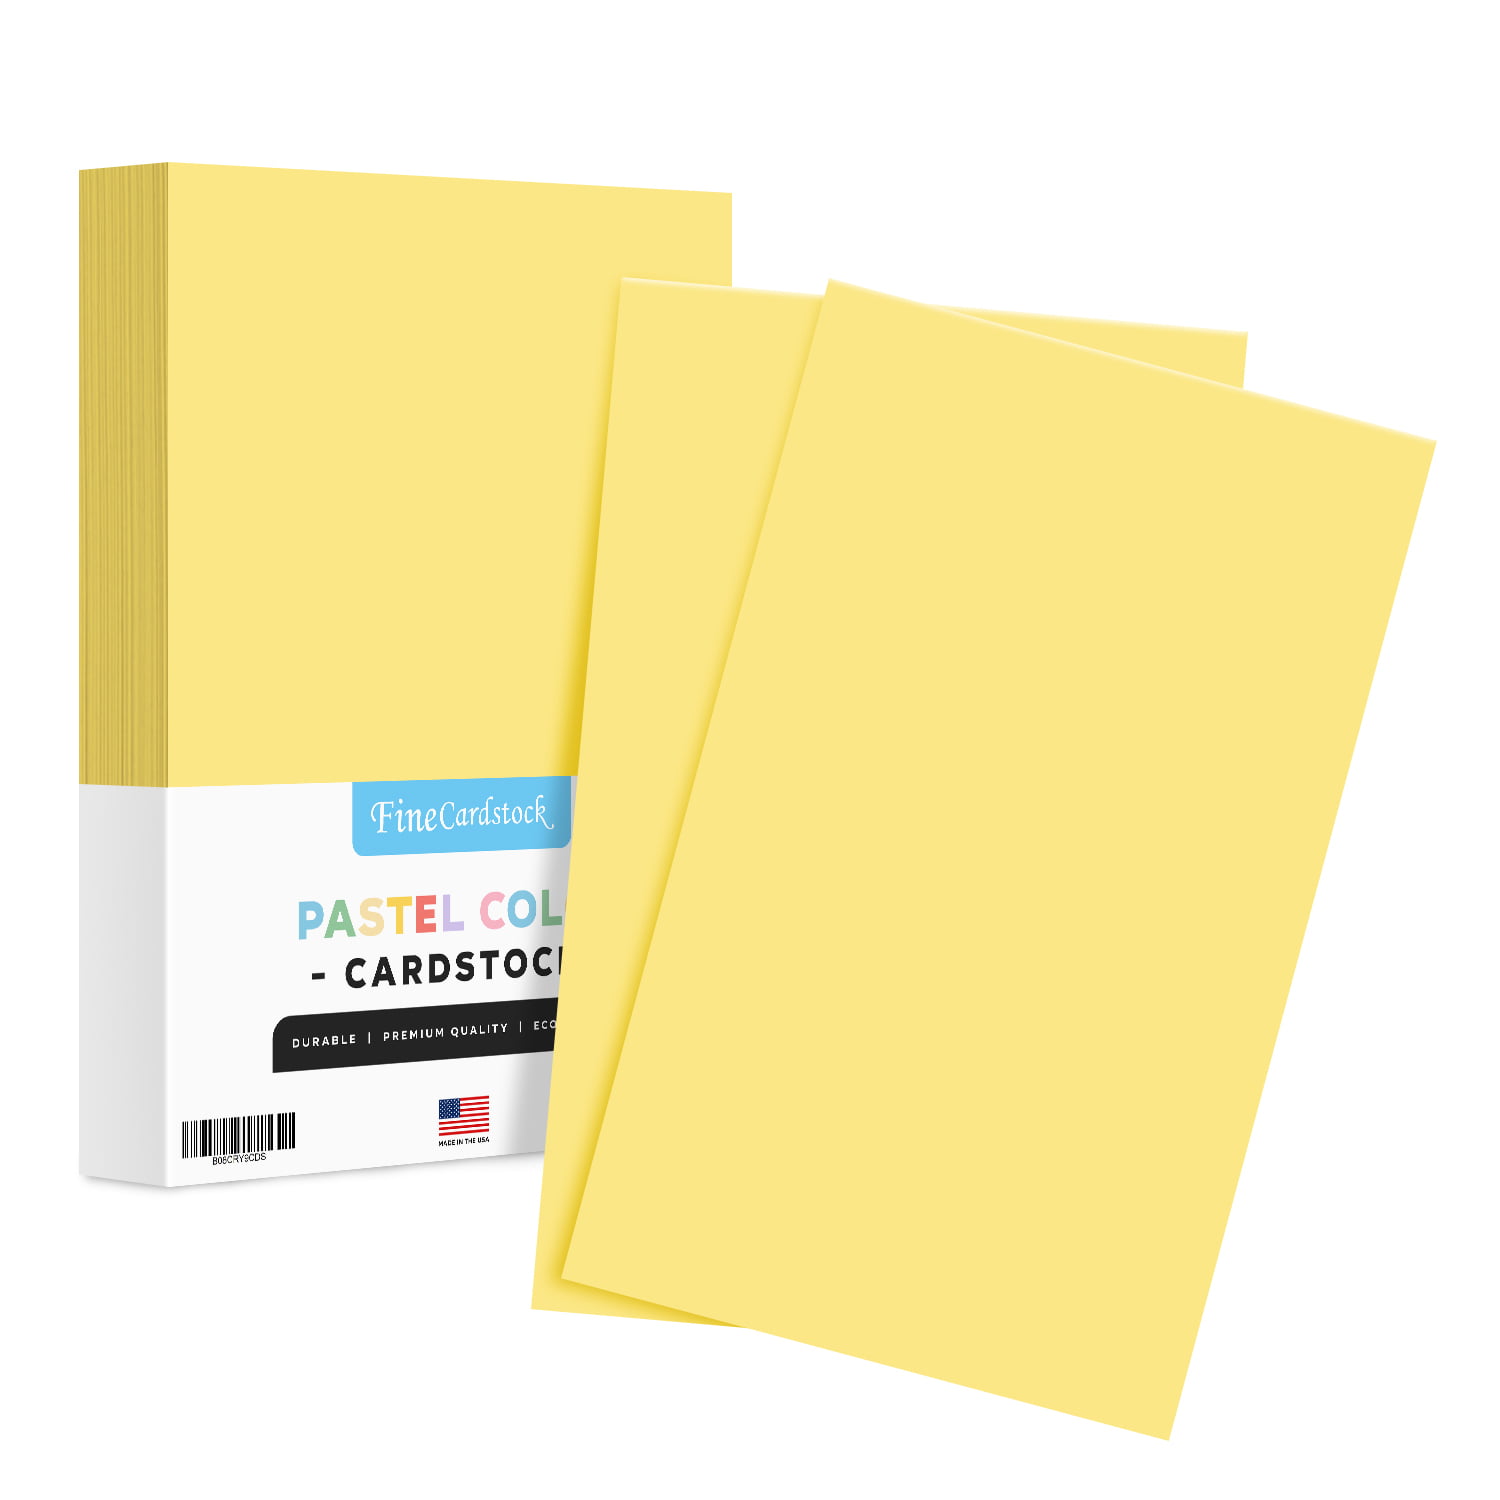 8.5 x 14 Cream Cardstock Paper, 67lb Vellum Bristol, Legal Size, 1000  Sheets